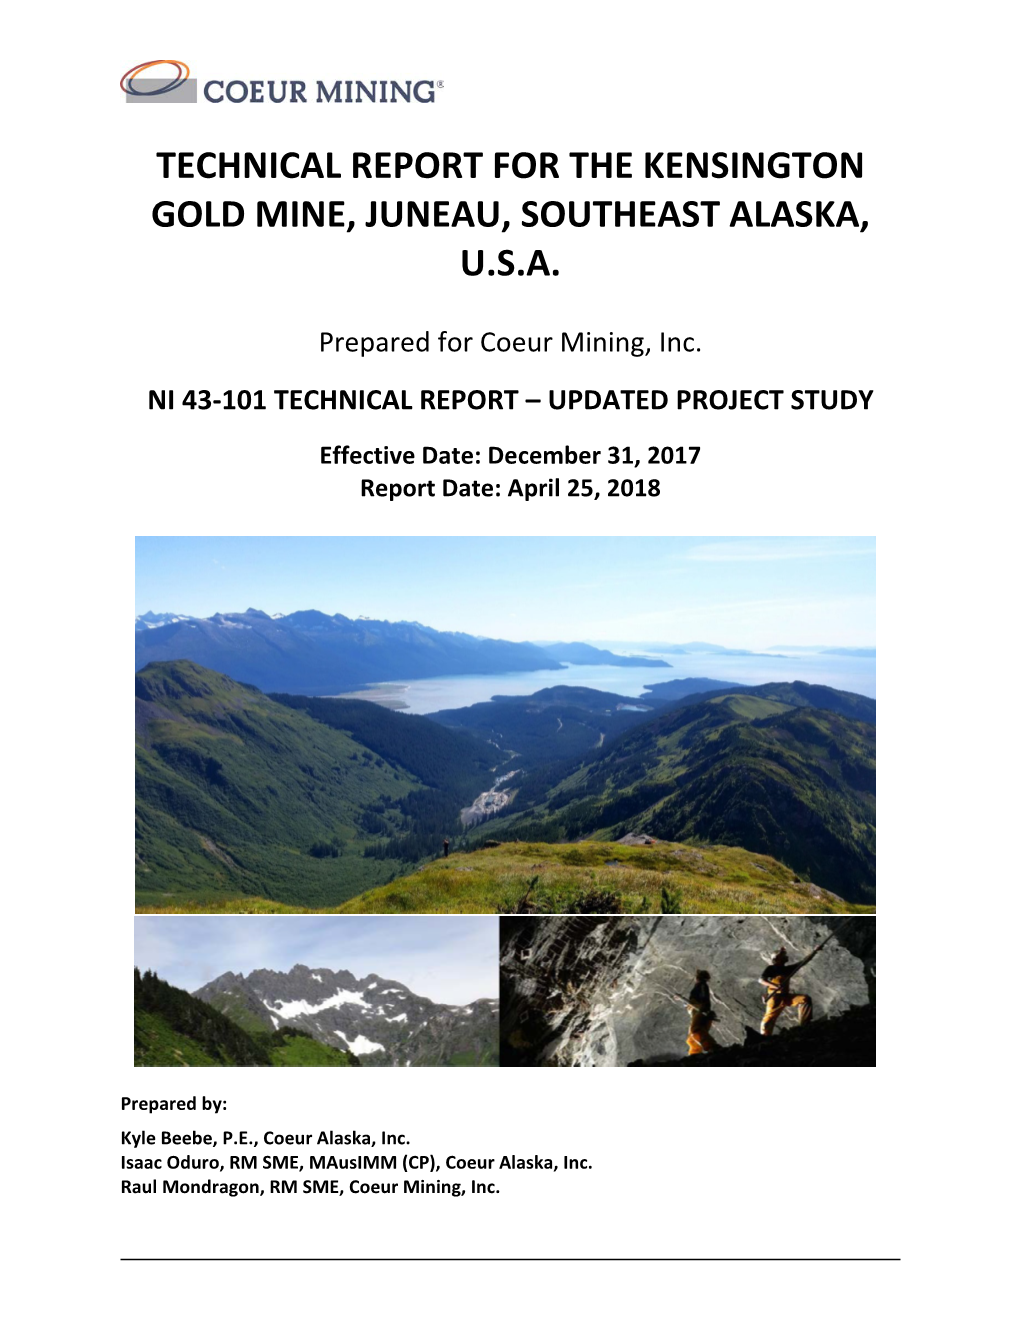 Technical Report for the Kensington Gold Mine, Juneau, Southeast Alaska, U.S.A